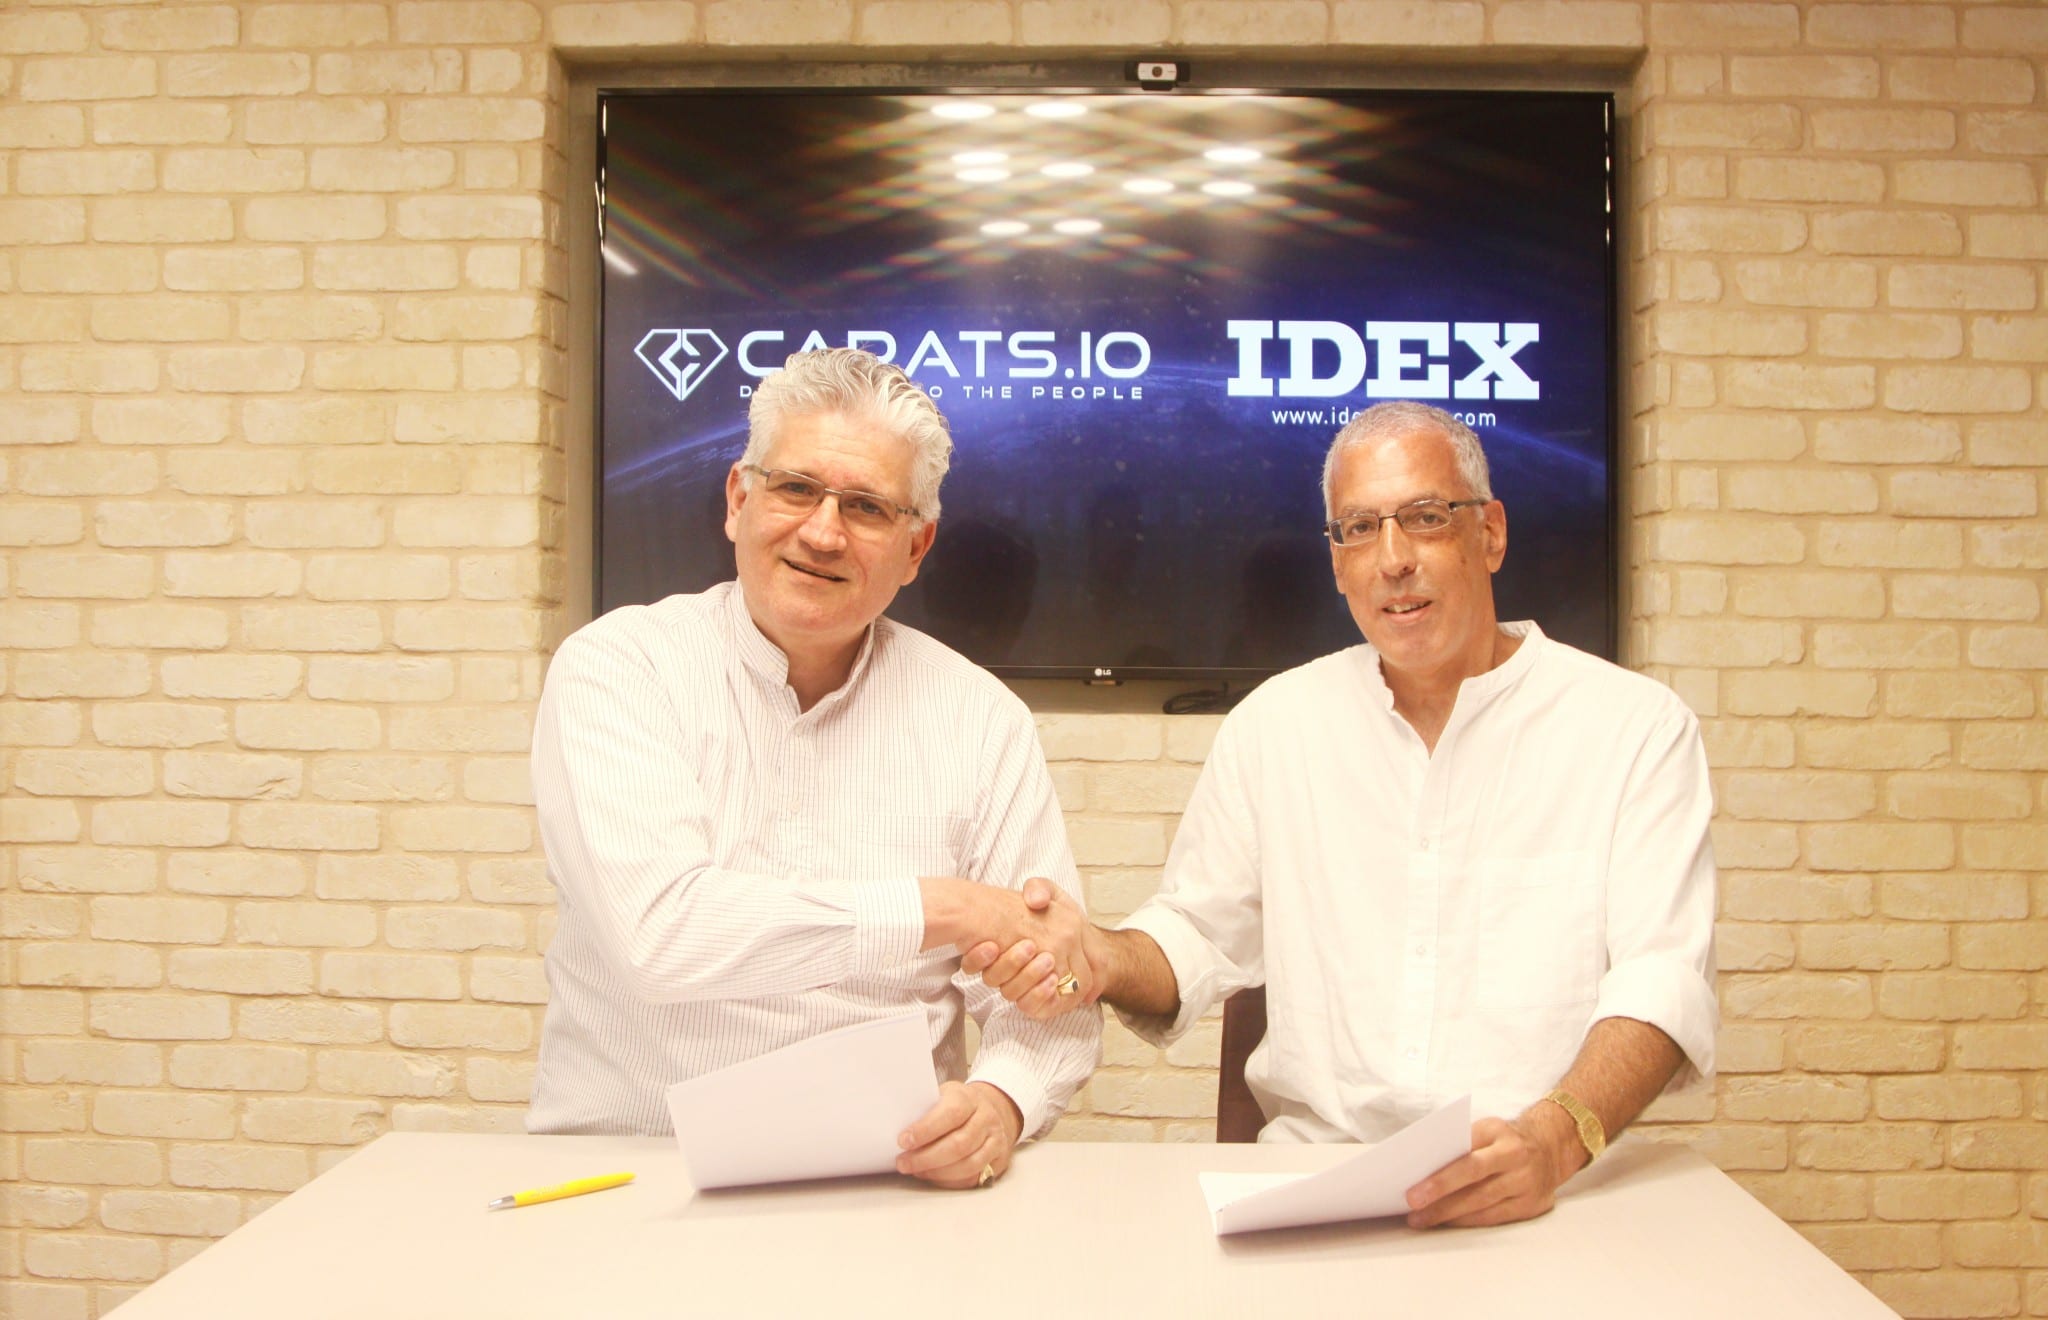 Carats.io and IDEX-International Diamond Exchange